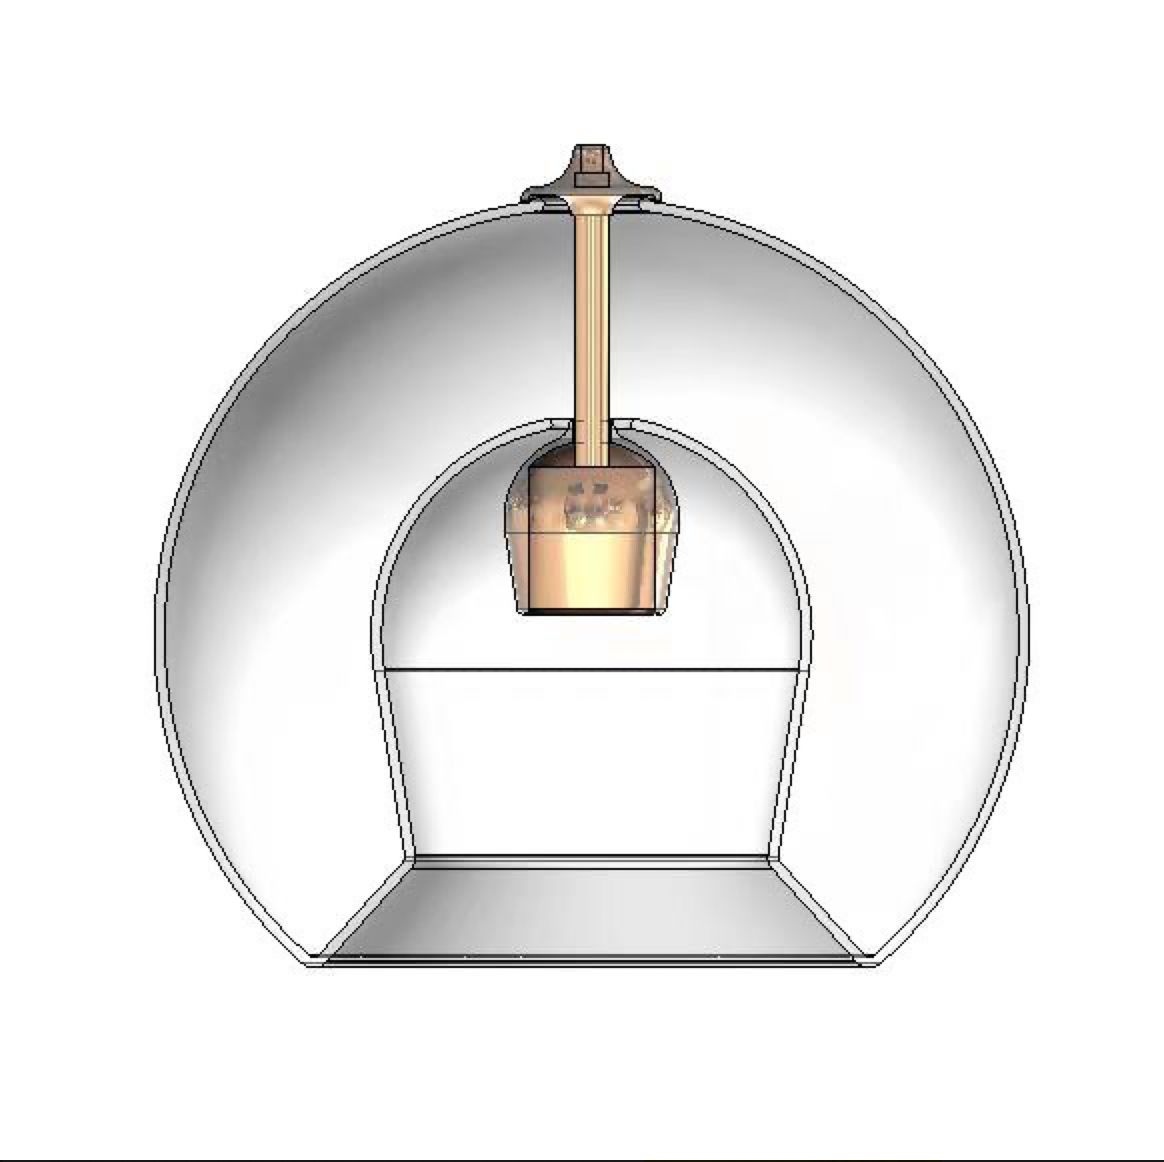 Lamp type 2